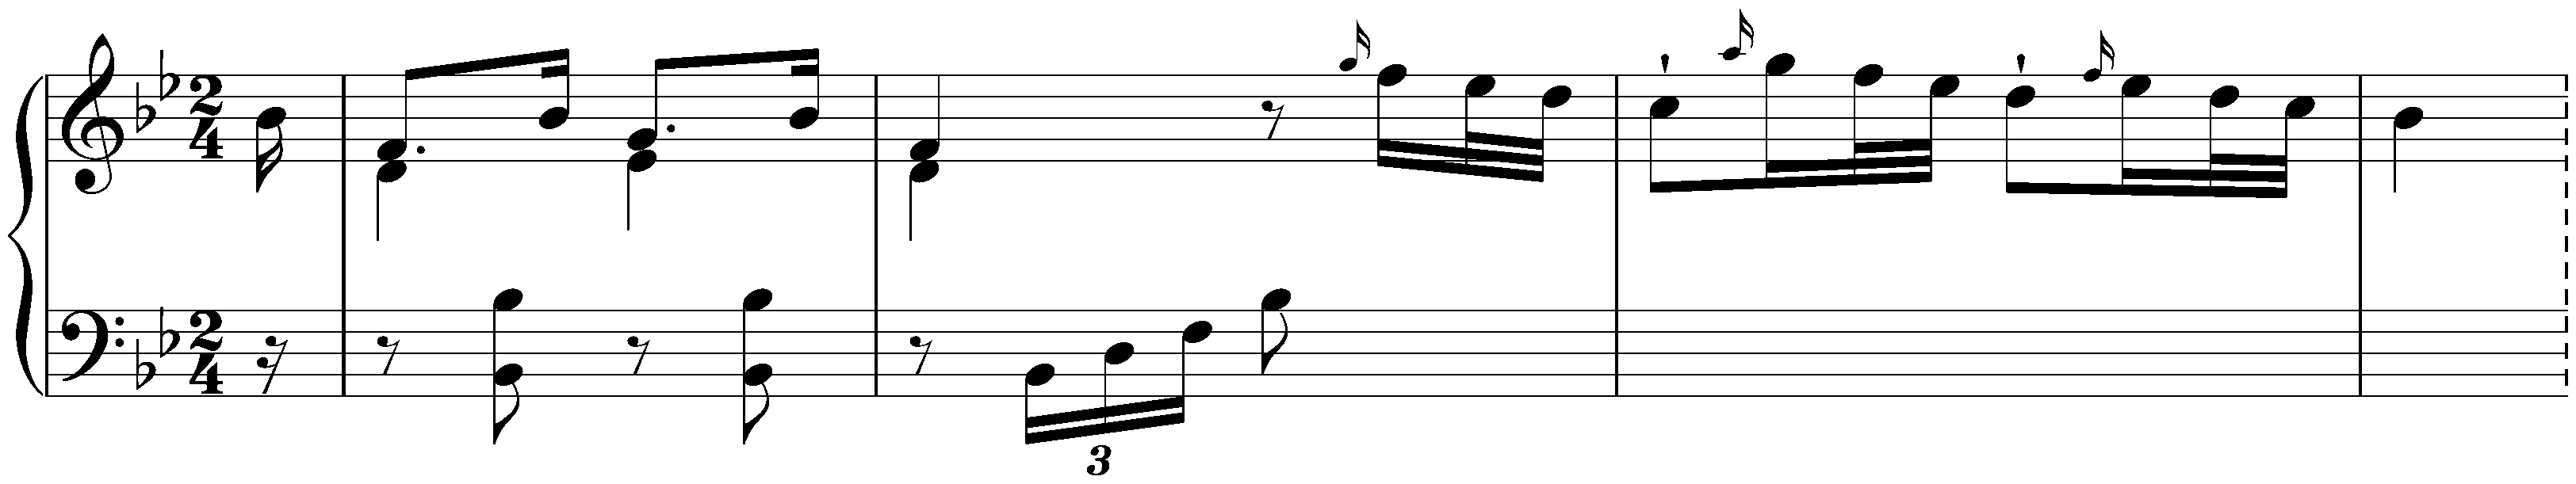 Incipits of lost works; 4. Sonata in B-flat major, Hob. XVI:2d, Landon 24